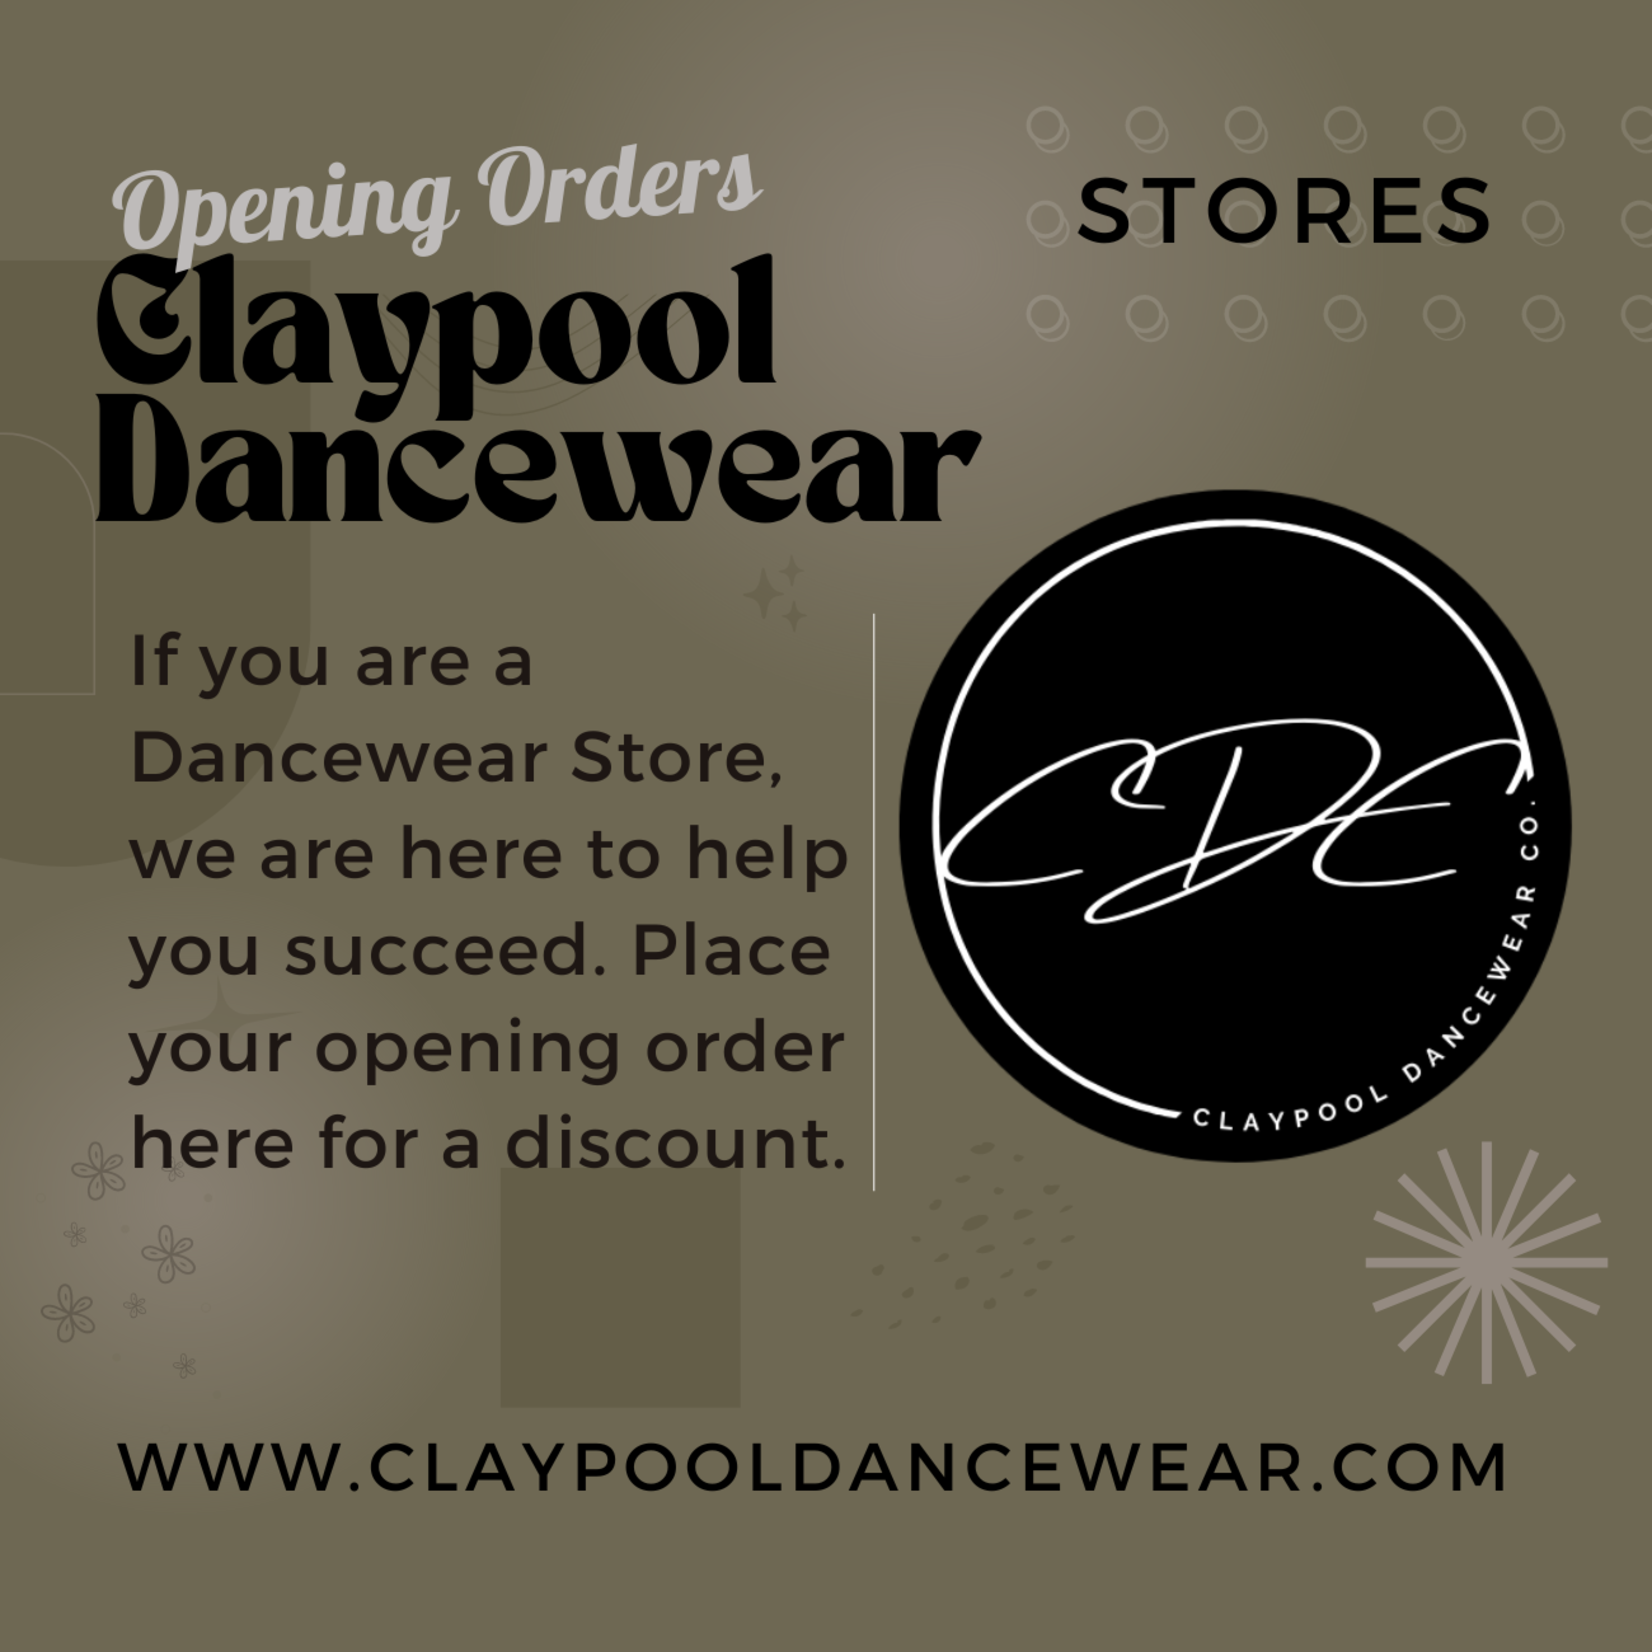 Claypool Dancewear Company Store Opening Order